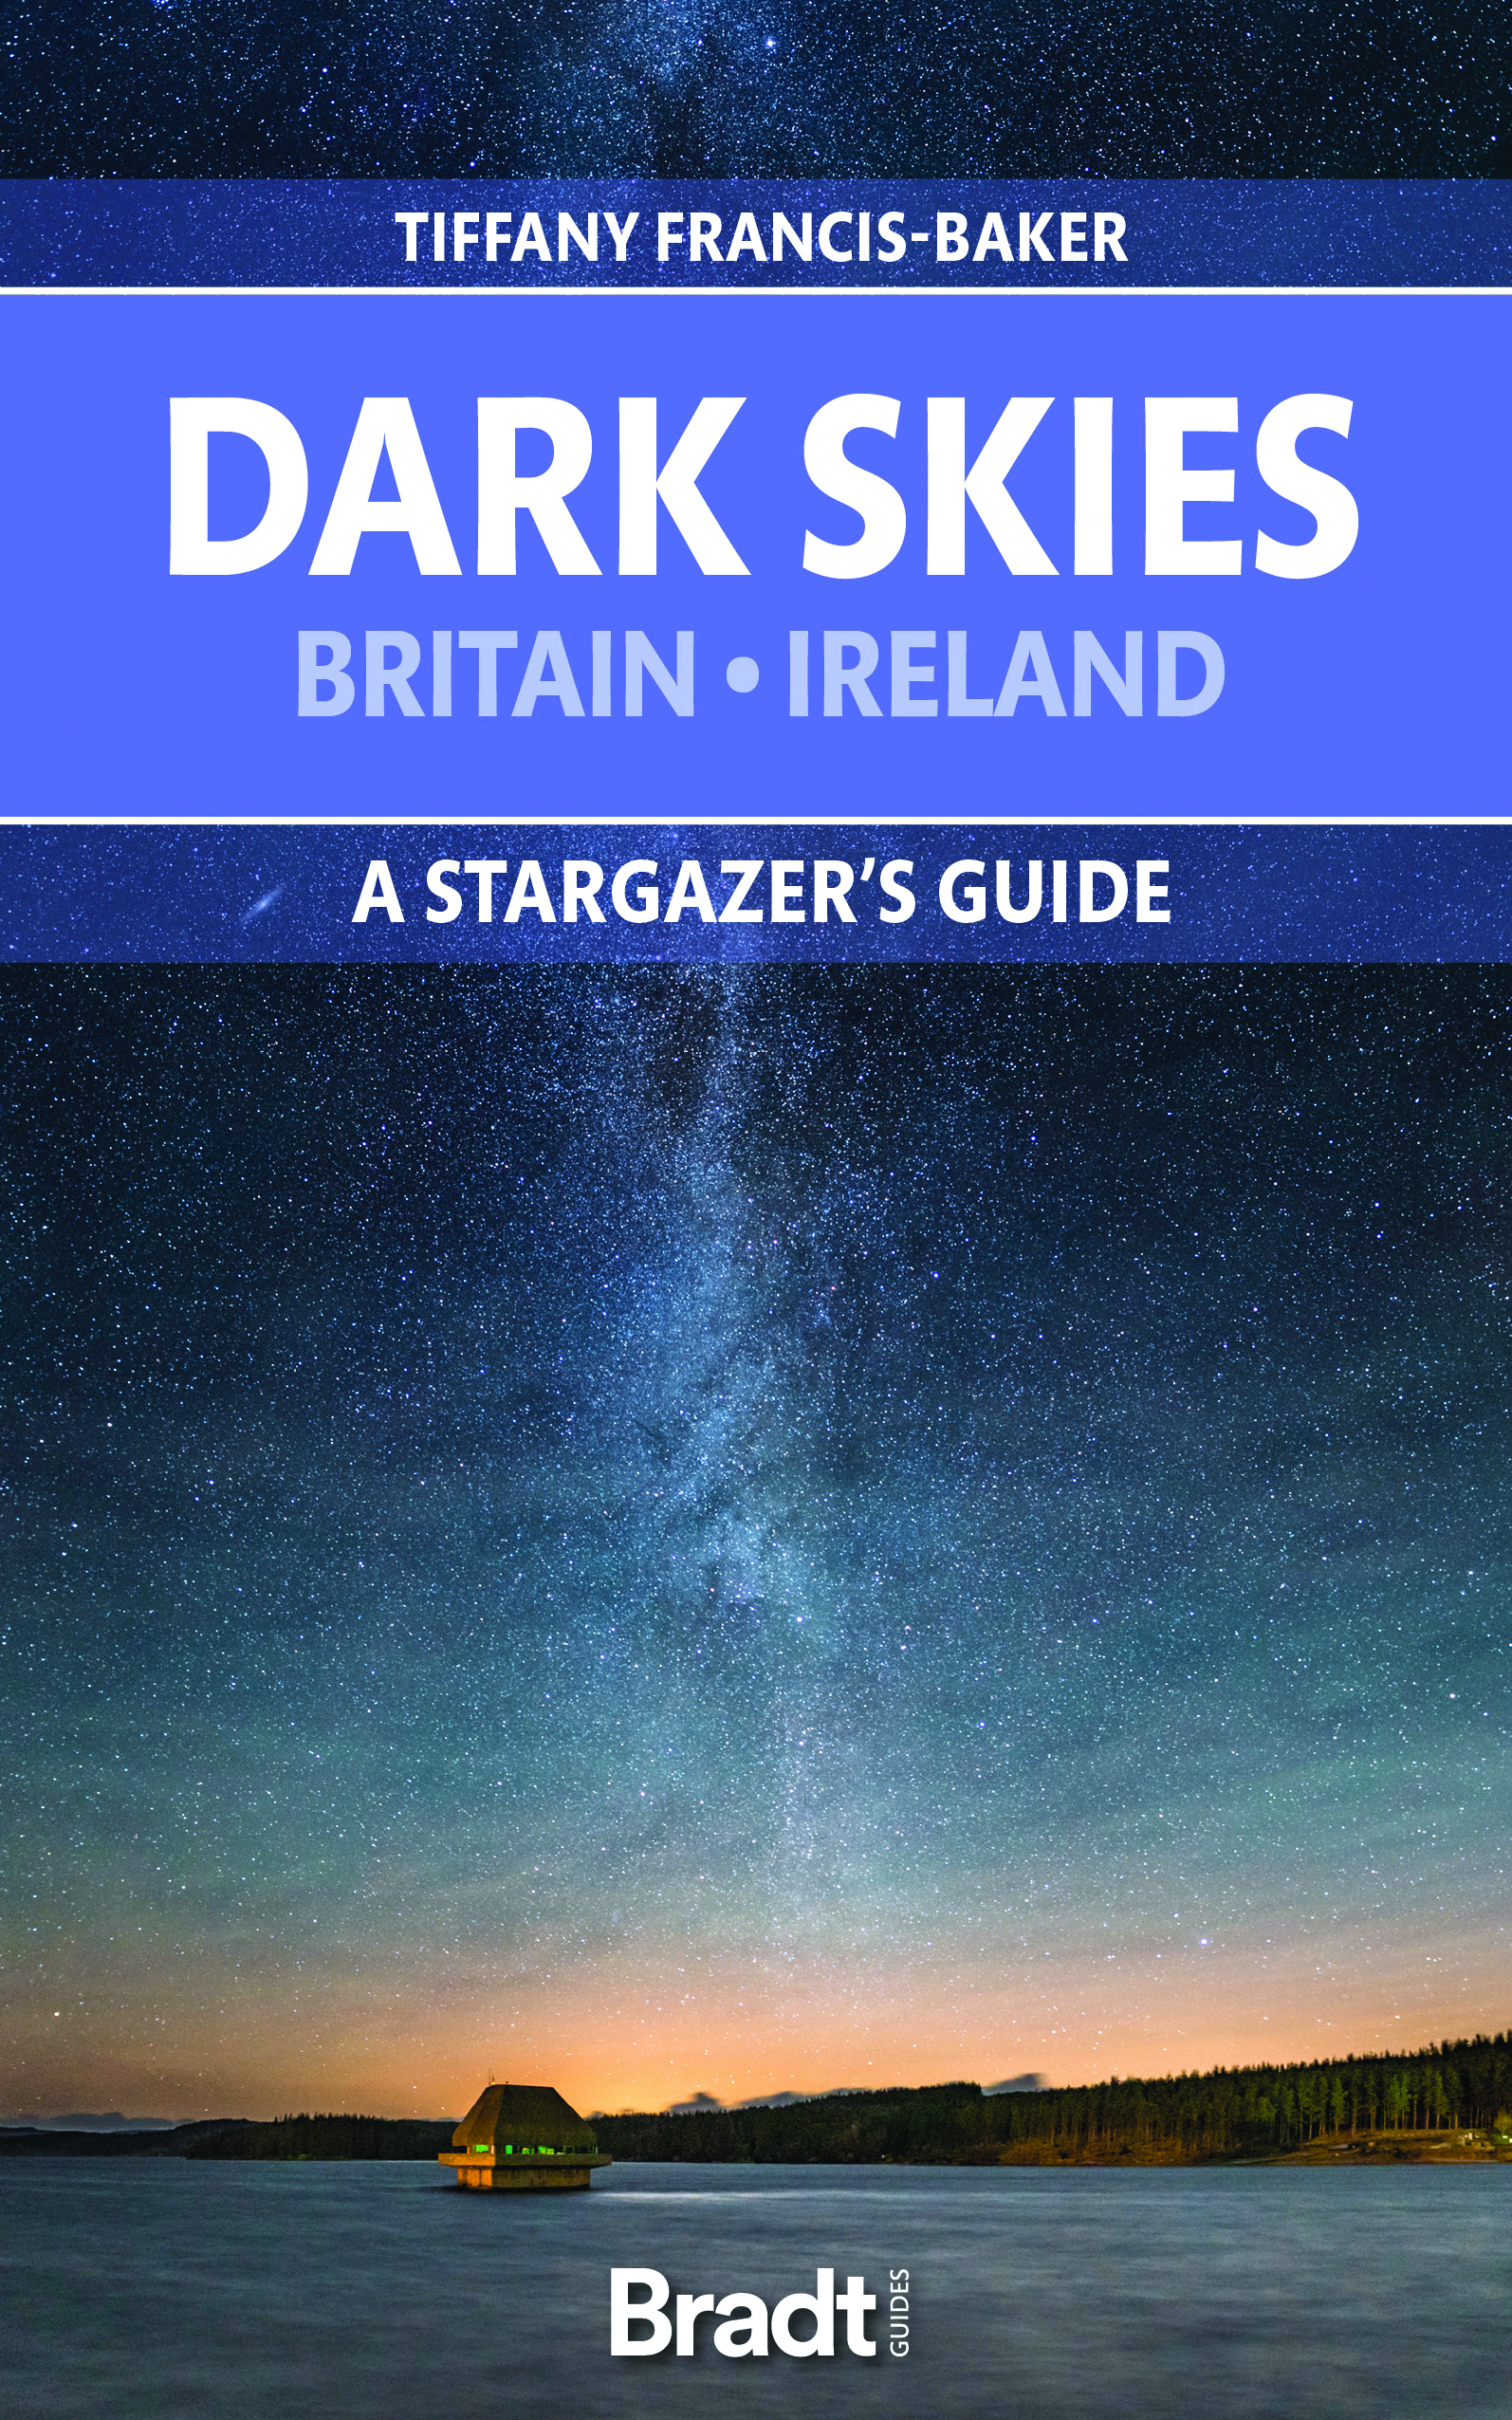 The　Bradt　Dark　Skies　of　Britain　Ireland　Guides